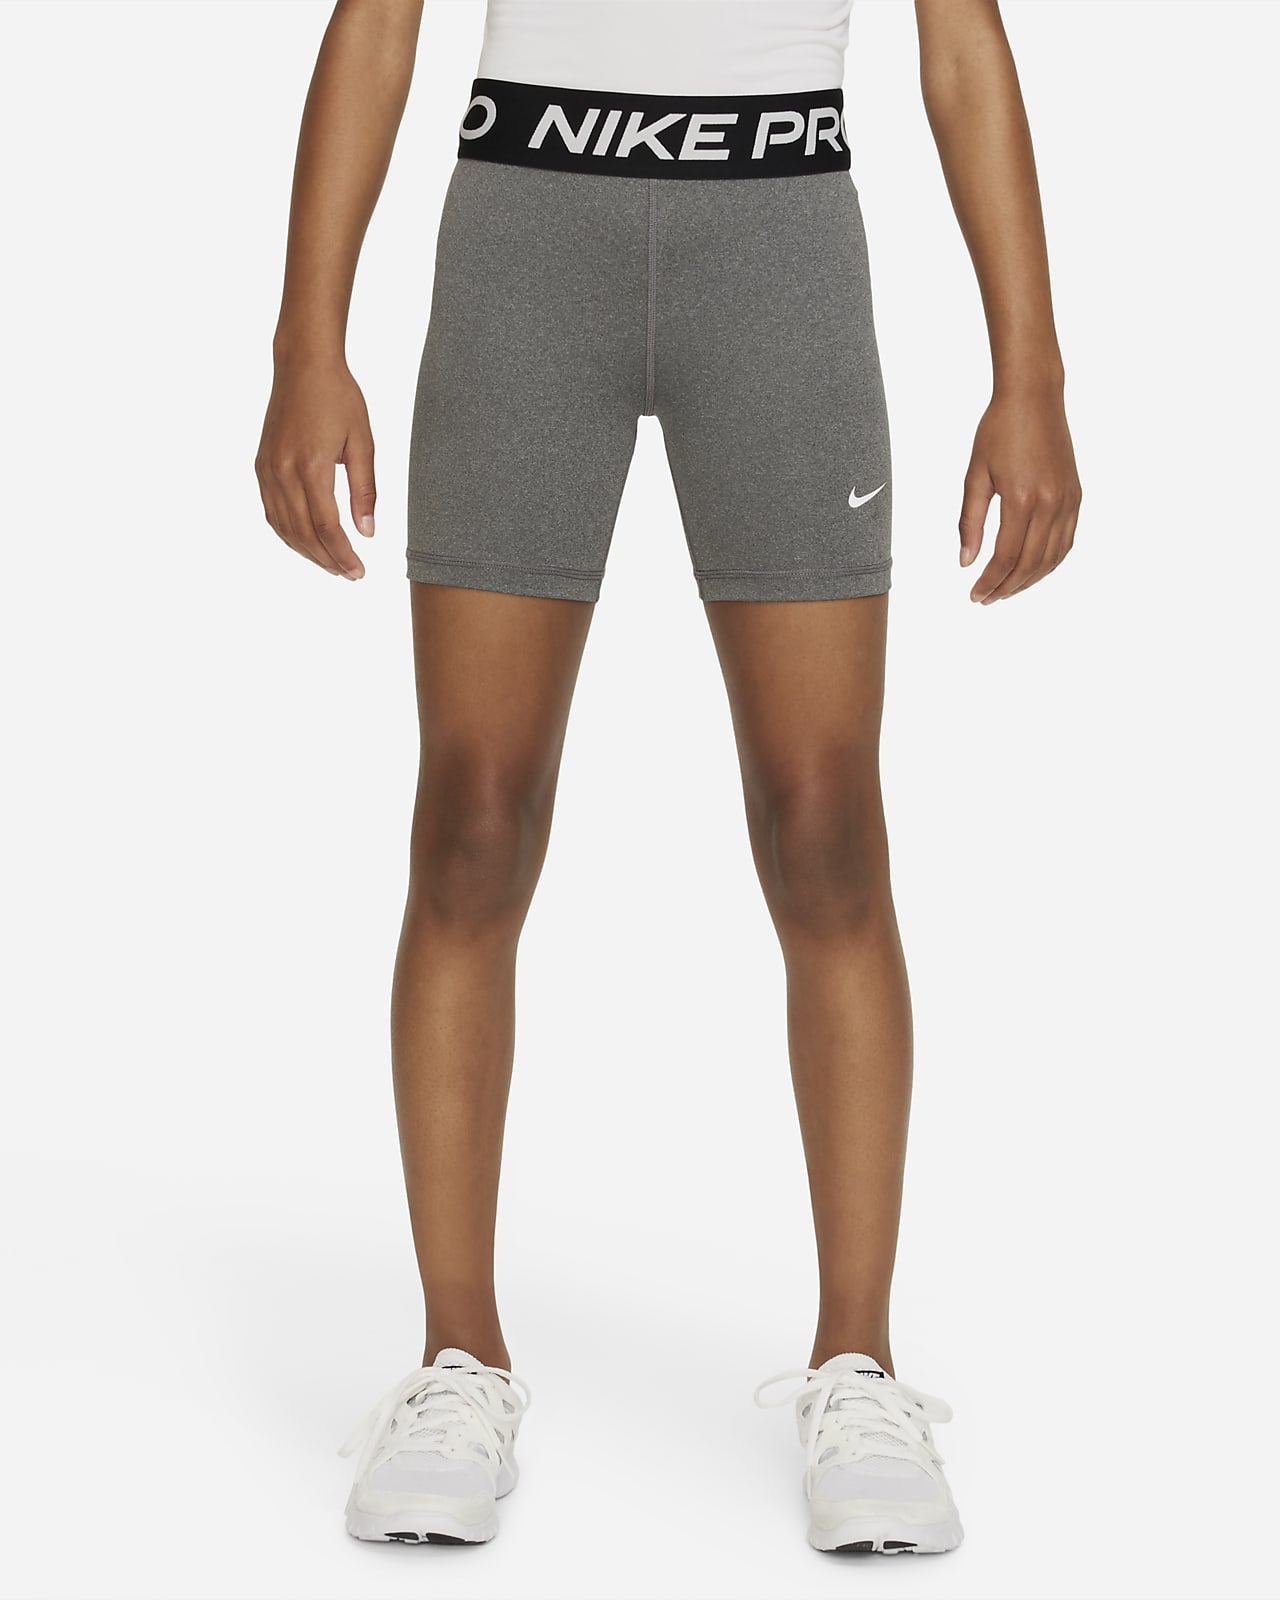 Shorts 13 cm Dri-FIT Nike Pro – Ragazza